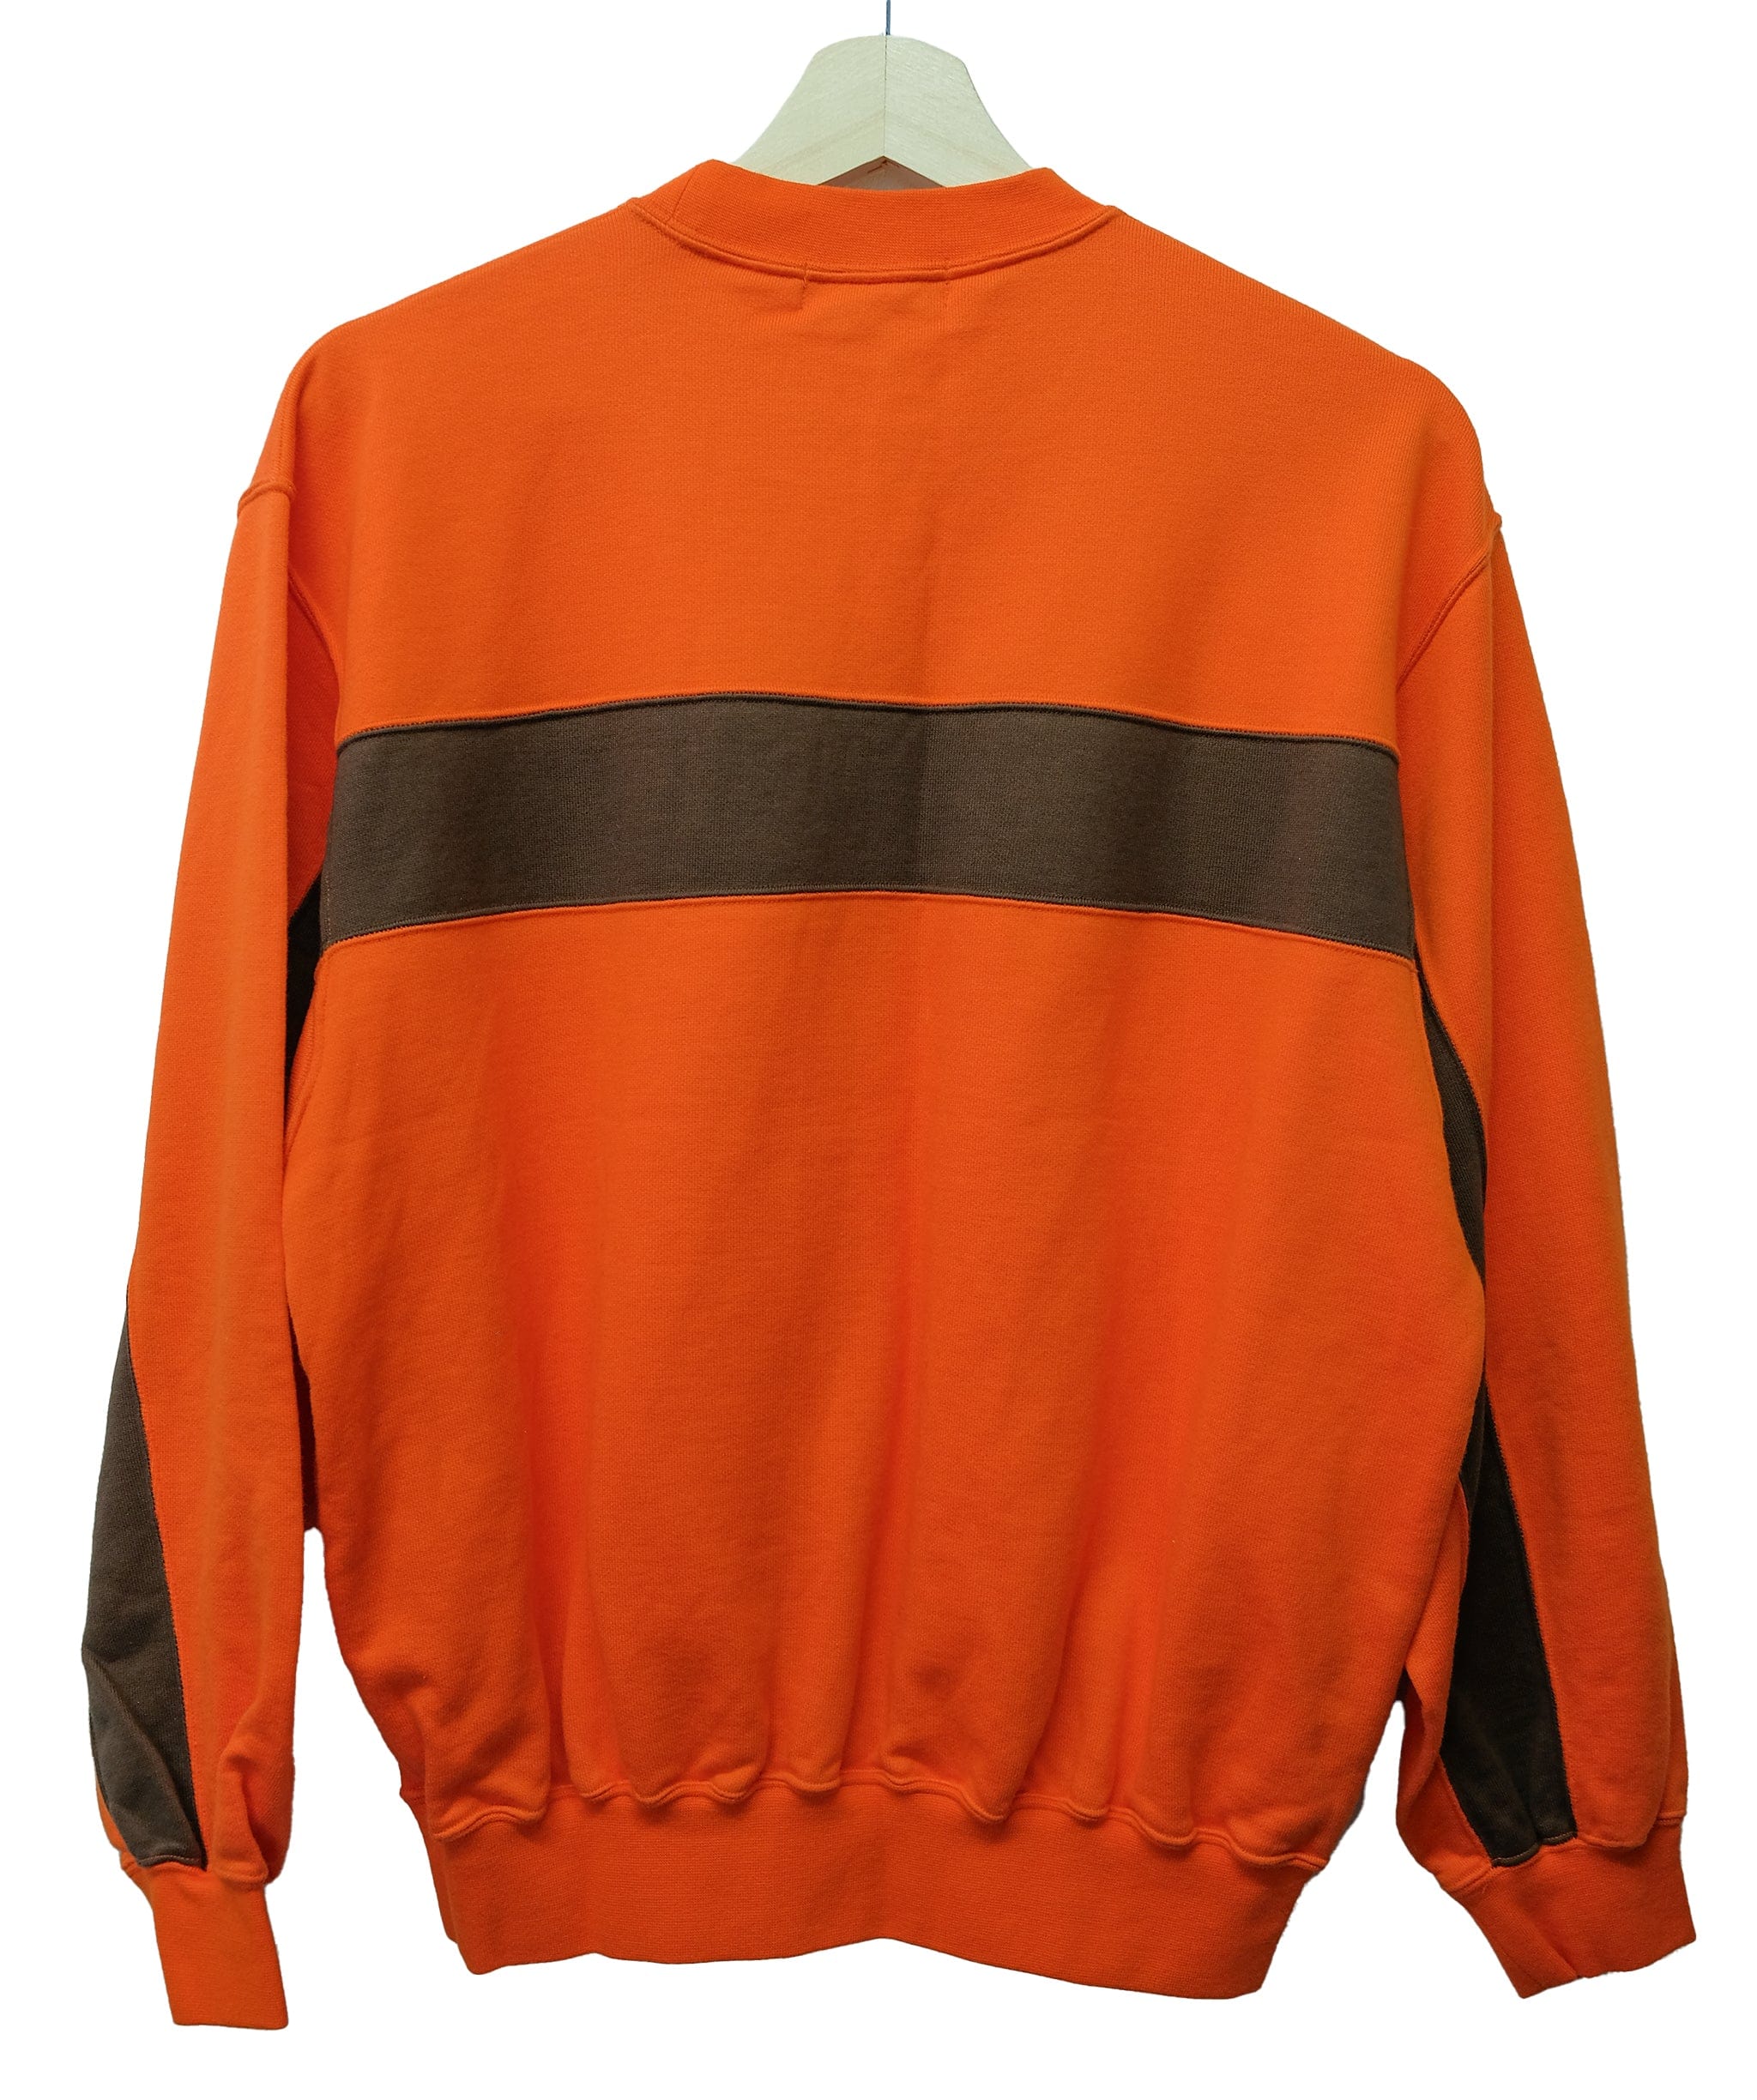 Christian Dior Dior Sport Sweatshirt Orange Brown  ASL10412